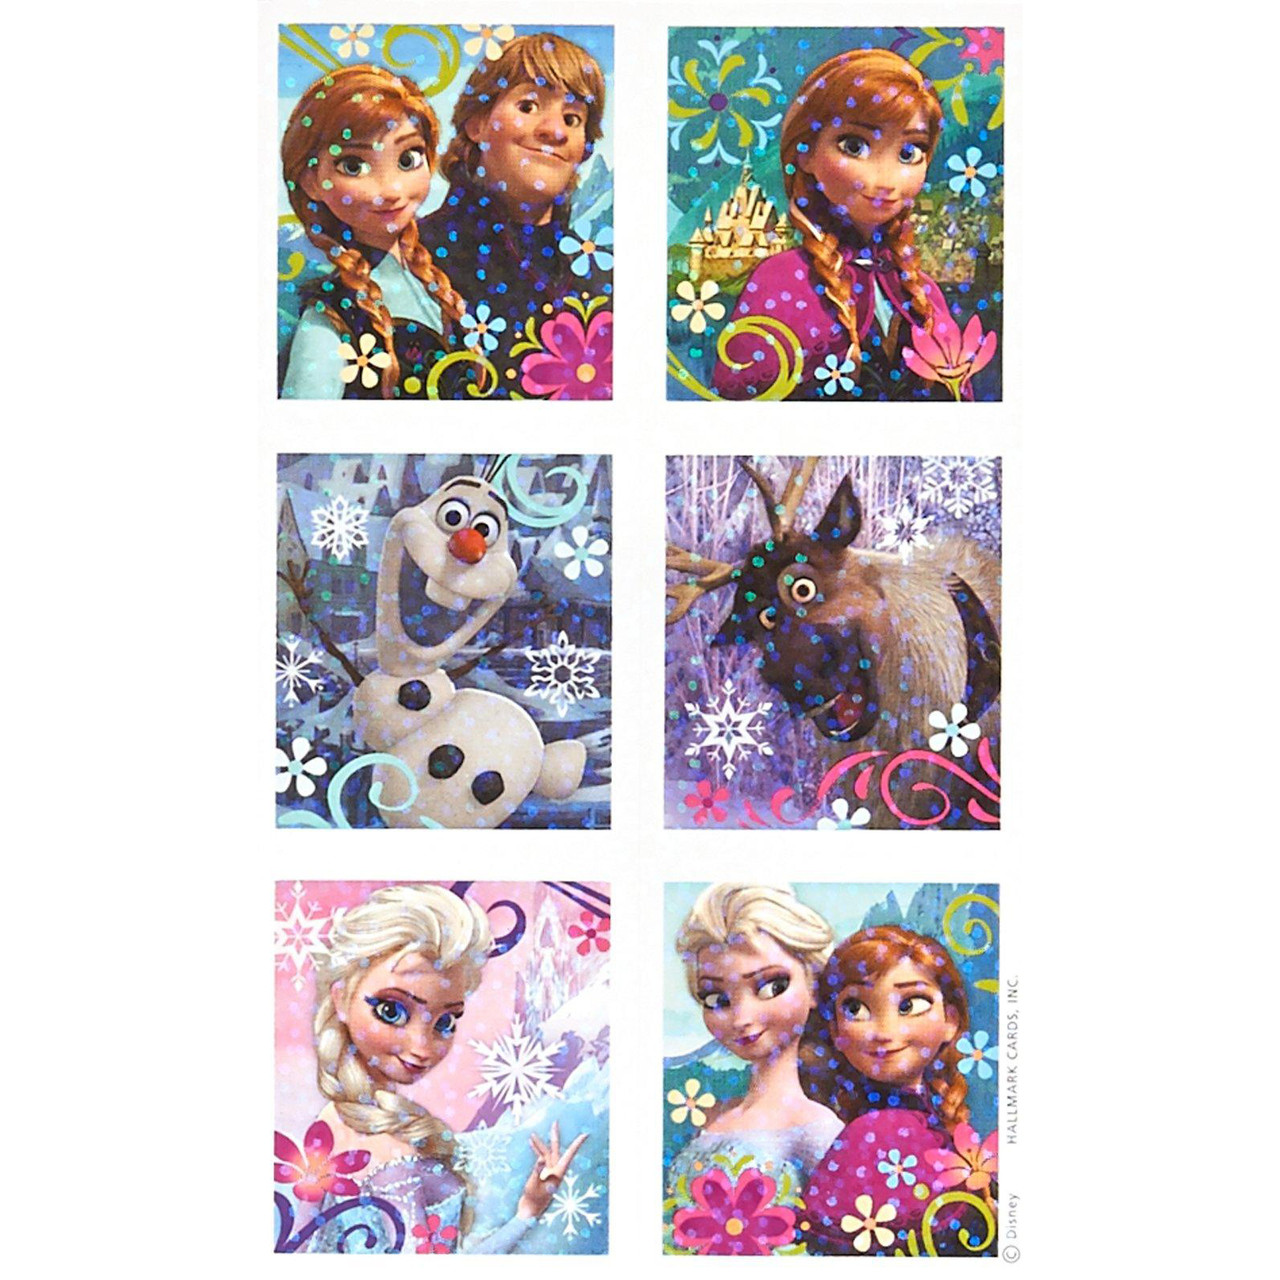 Disneys Frozen Sticker Party Favors